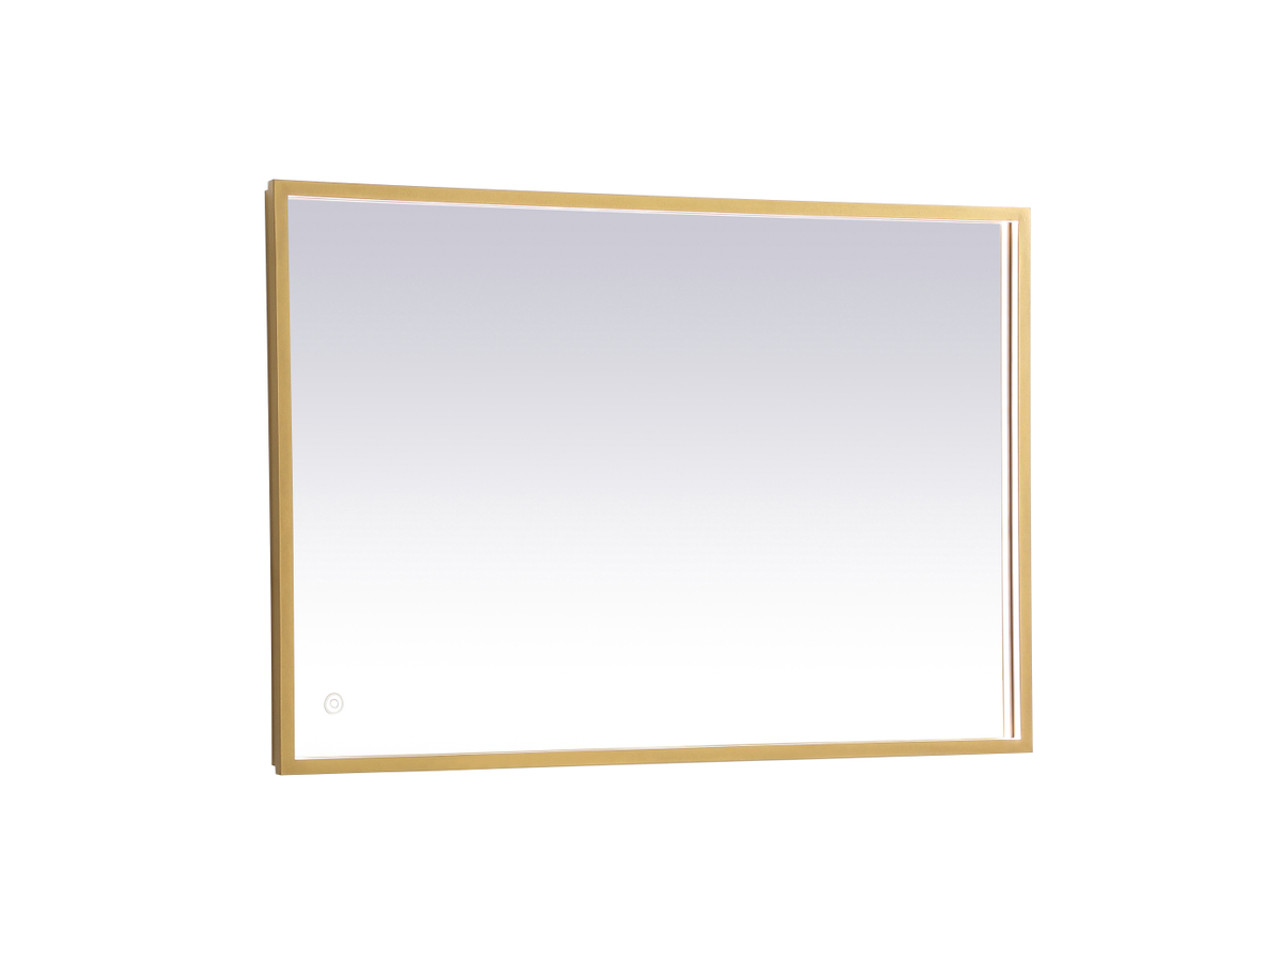 Elegant Decor MRE62436BR Pier 24x36 inch LED mirror with adjustable color temperature 3000K/4200K/6400K in brass